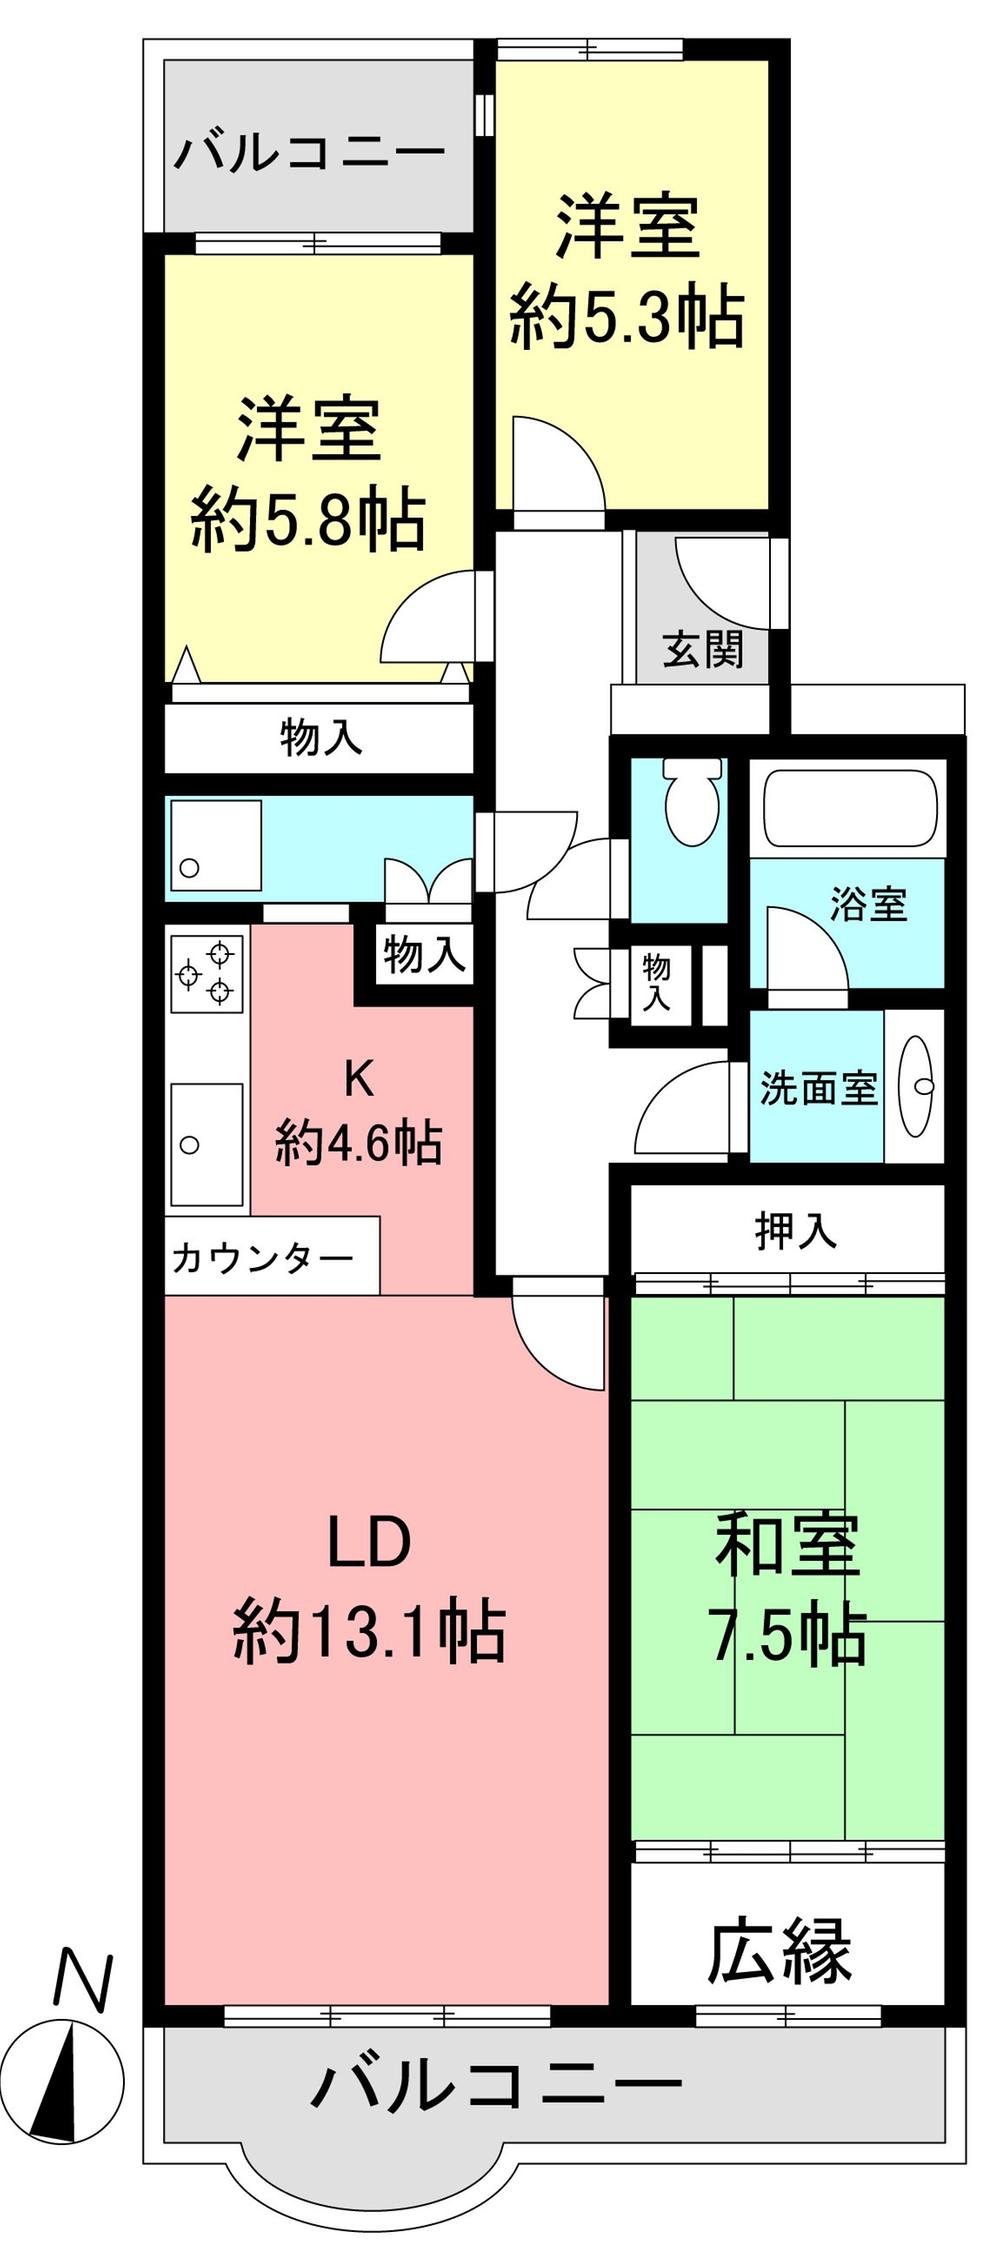 Floor plan. 3LDK, Price 14.5 million yen, Occupied area 90.35 sq m , Balcony area 12.88 sq m